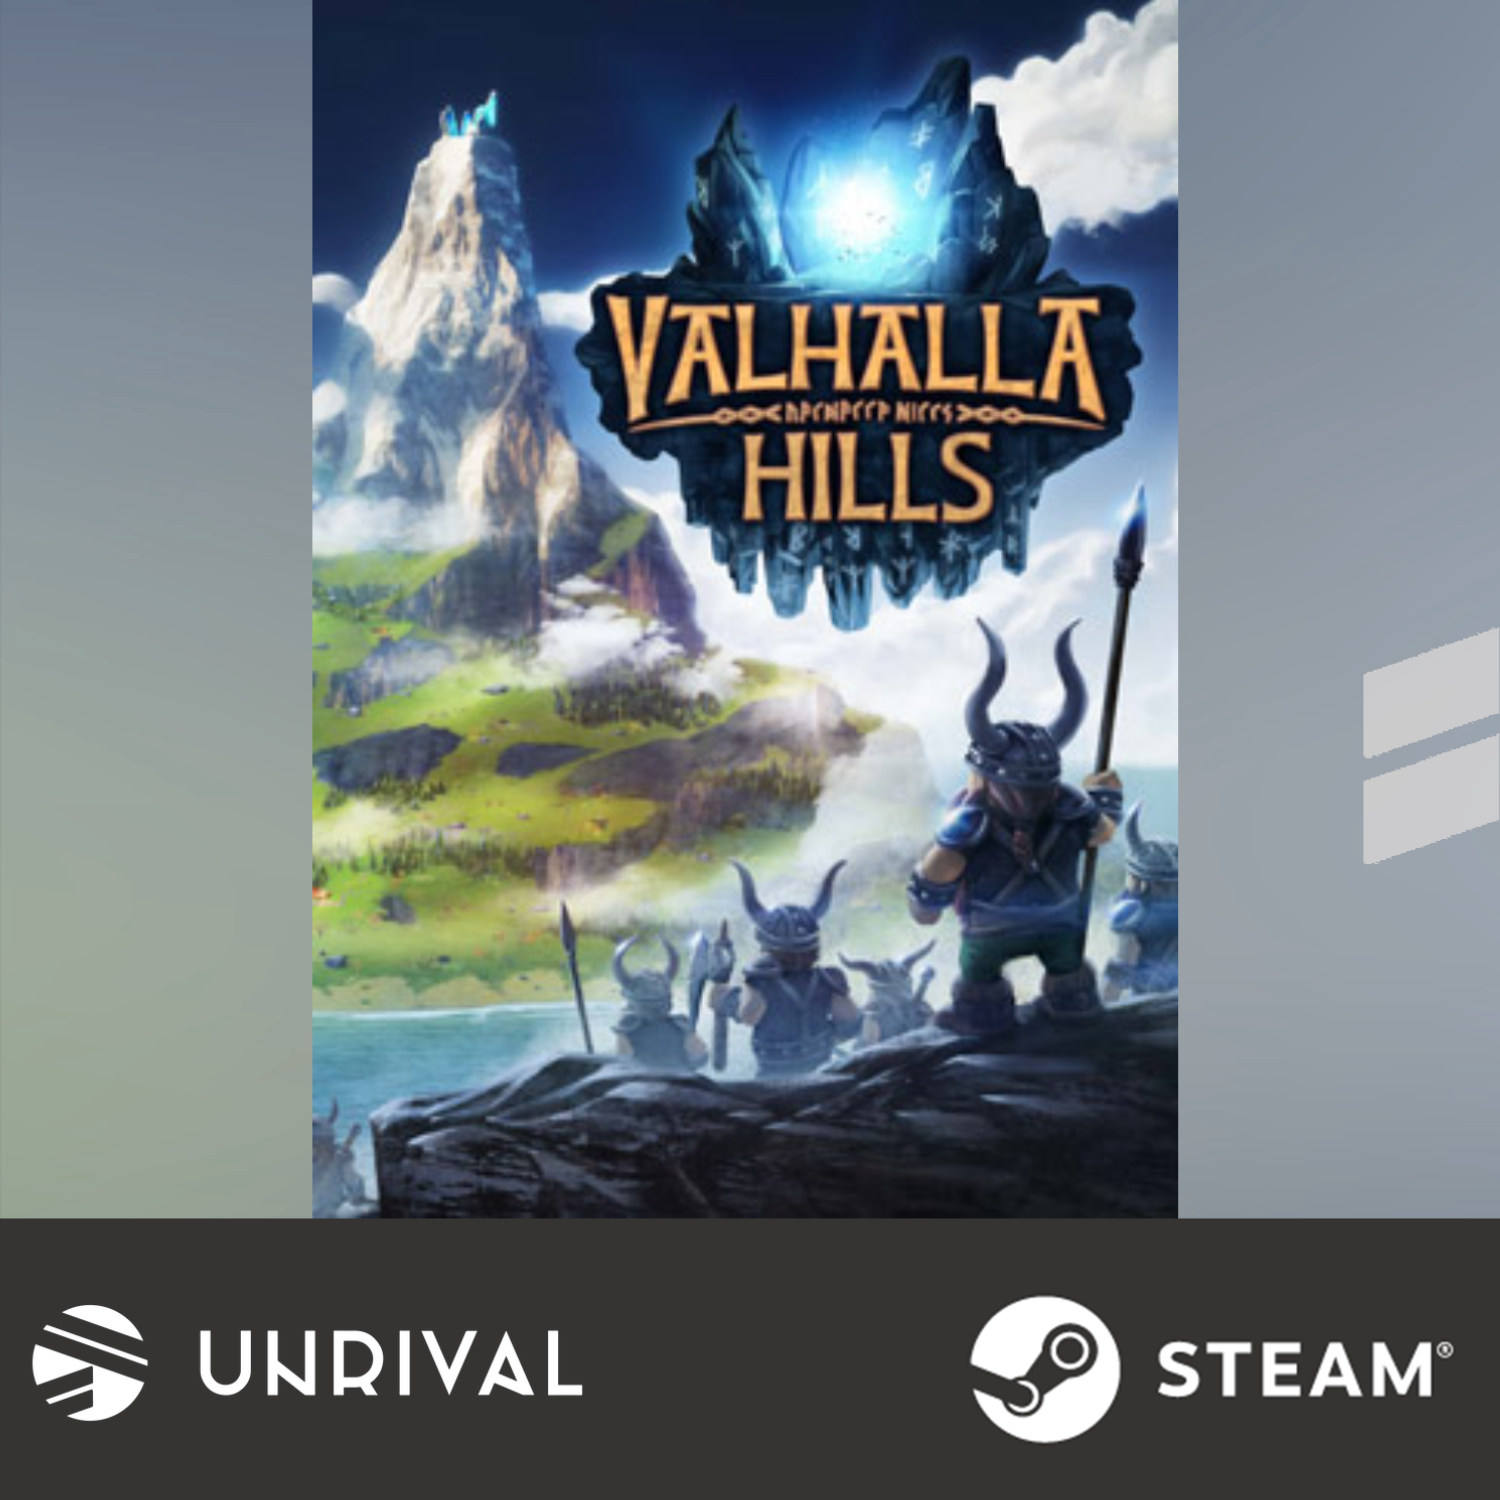 [Hot Sale] Valhalla Hills PC Digital Download Game (Single Player) - Unrival